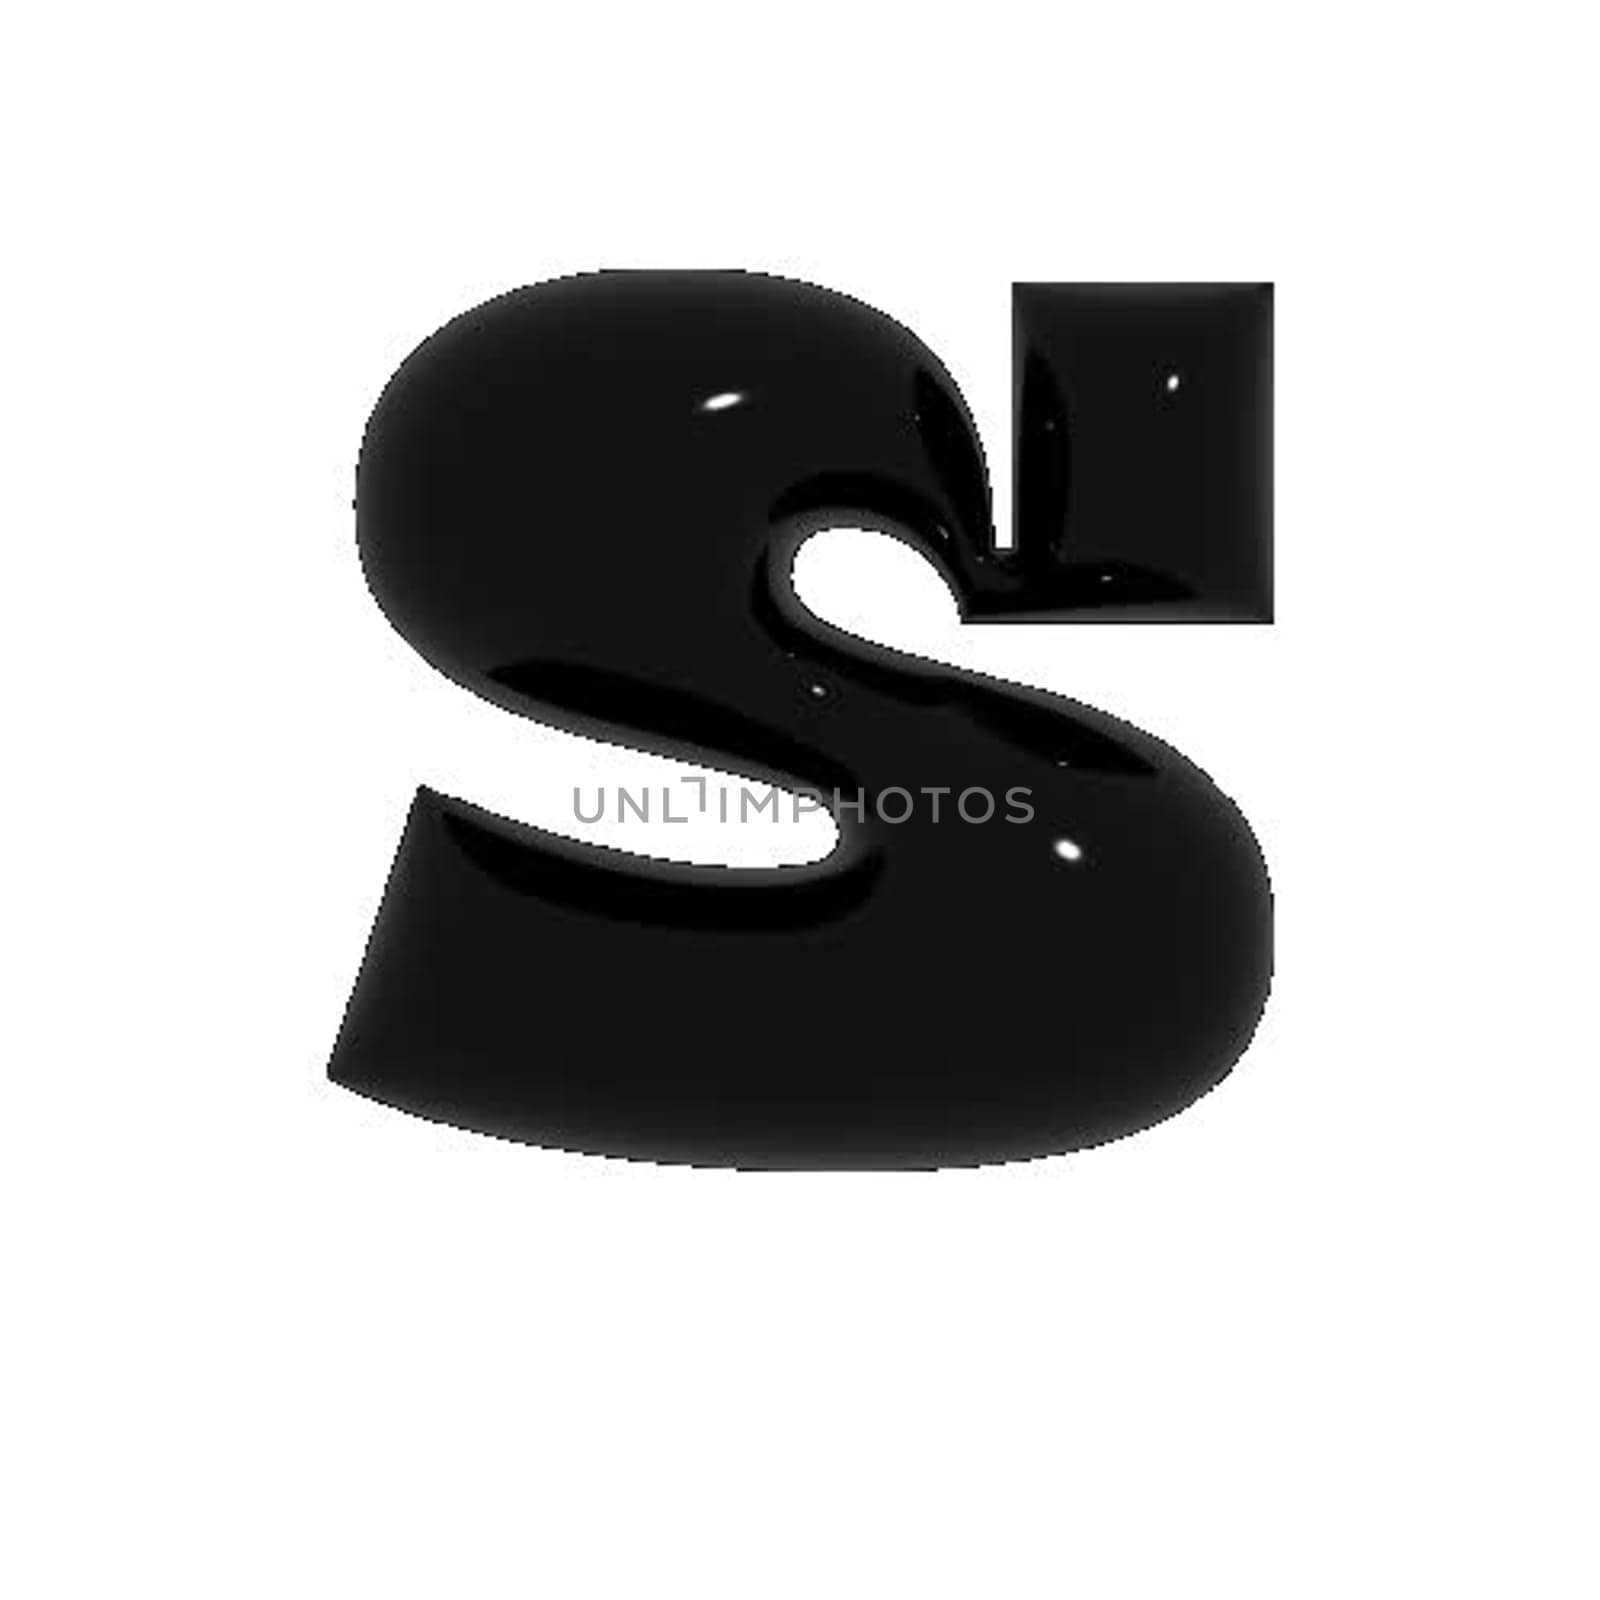 Black metal shiny reflective letter S 3D illustration by Dustick